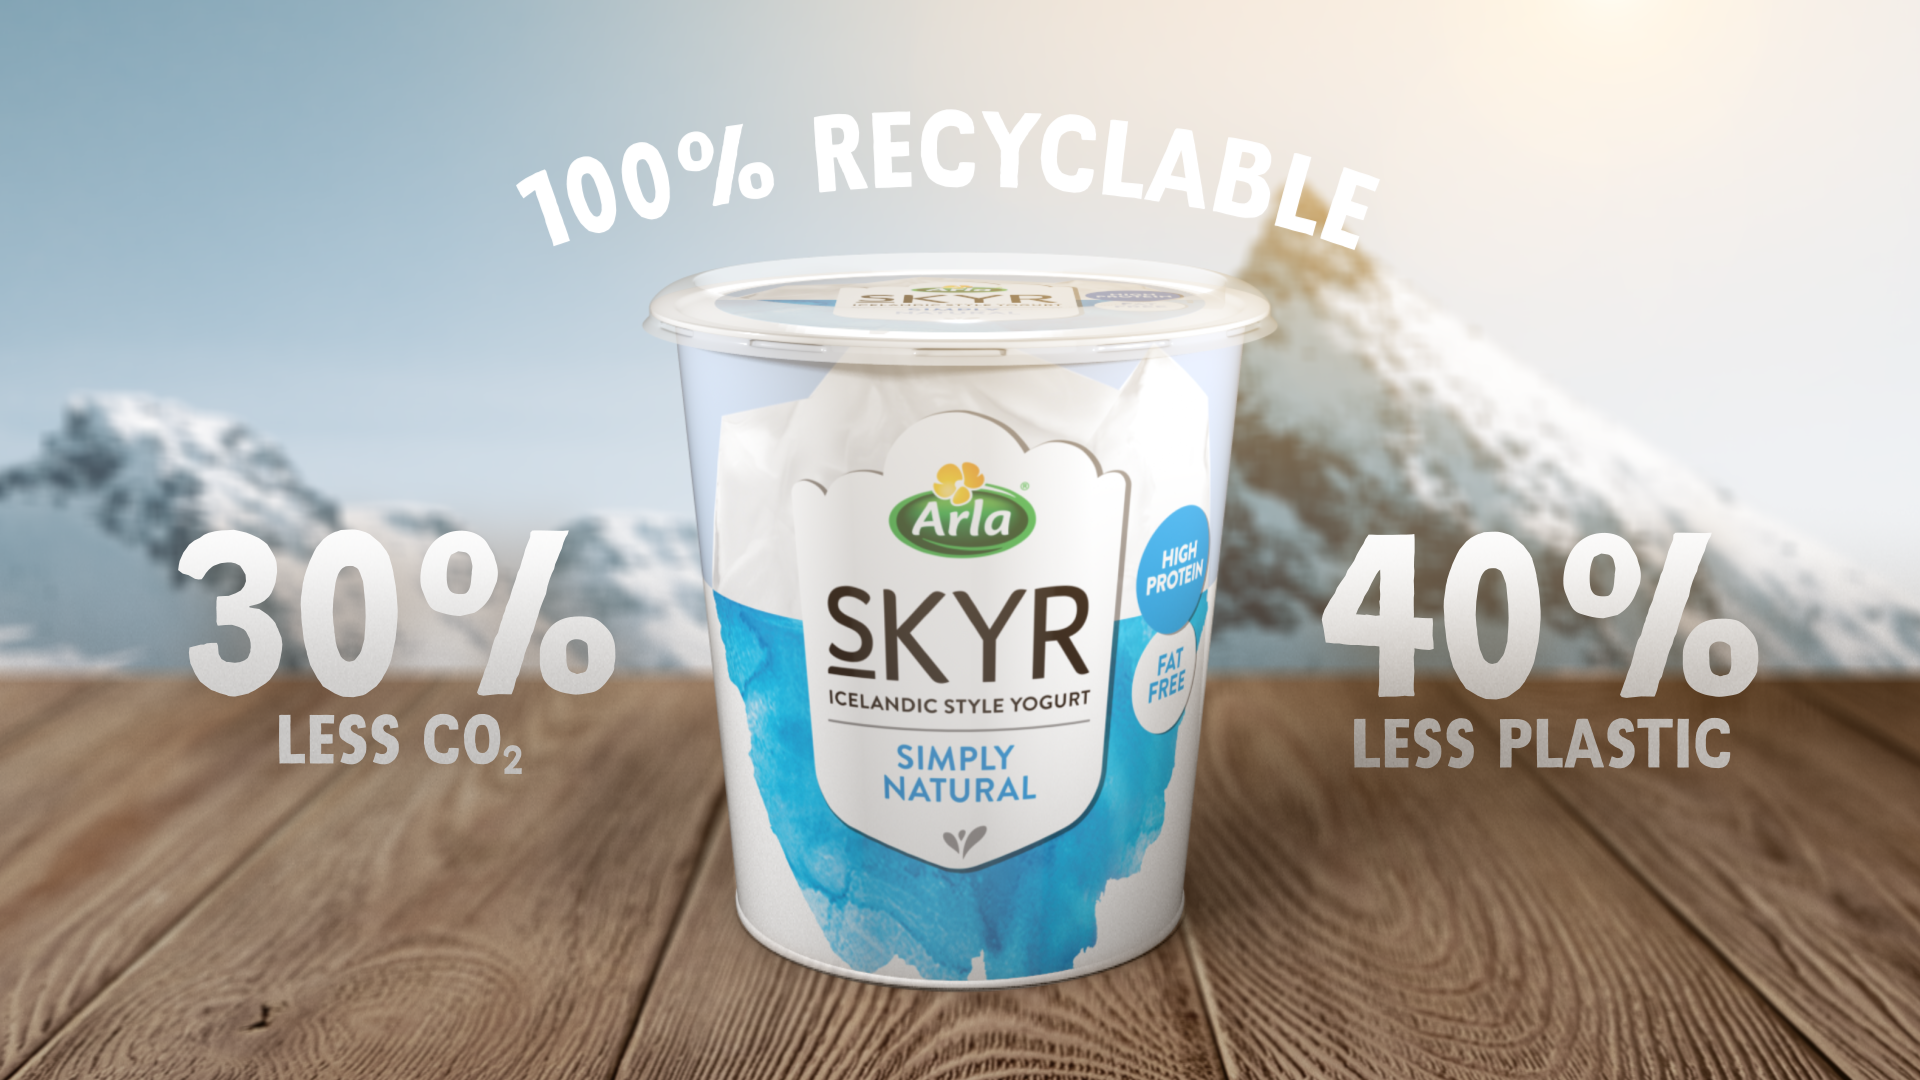 New skyr bucket reduces plastic | Arla 40 percent by